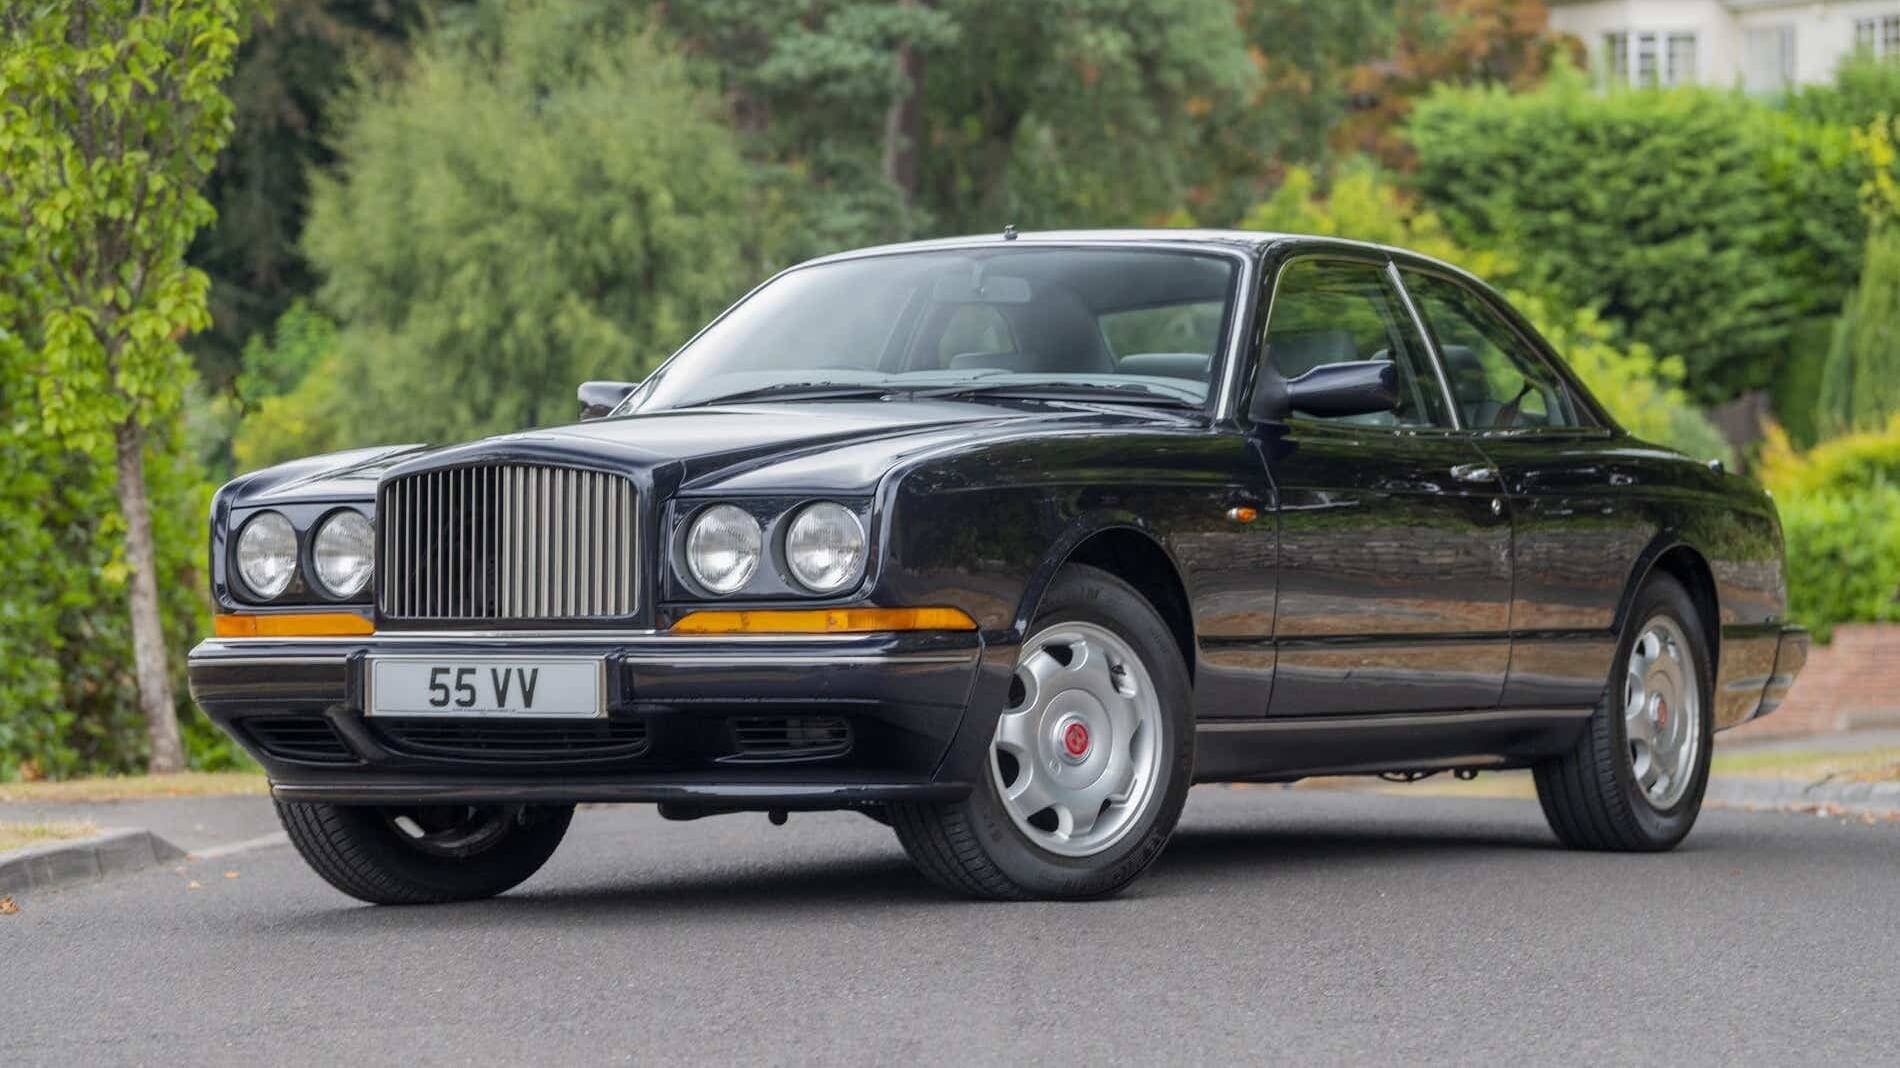 Classic Bentley uses a 6.75-litre V8 engine.